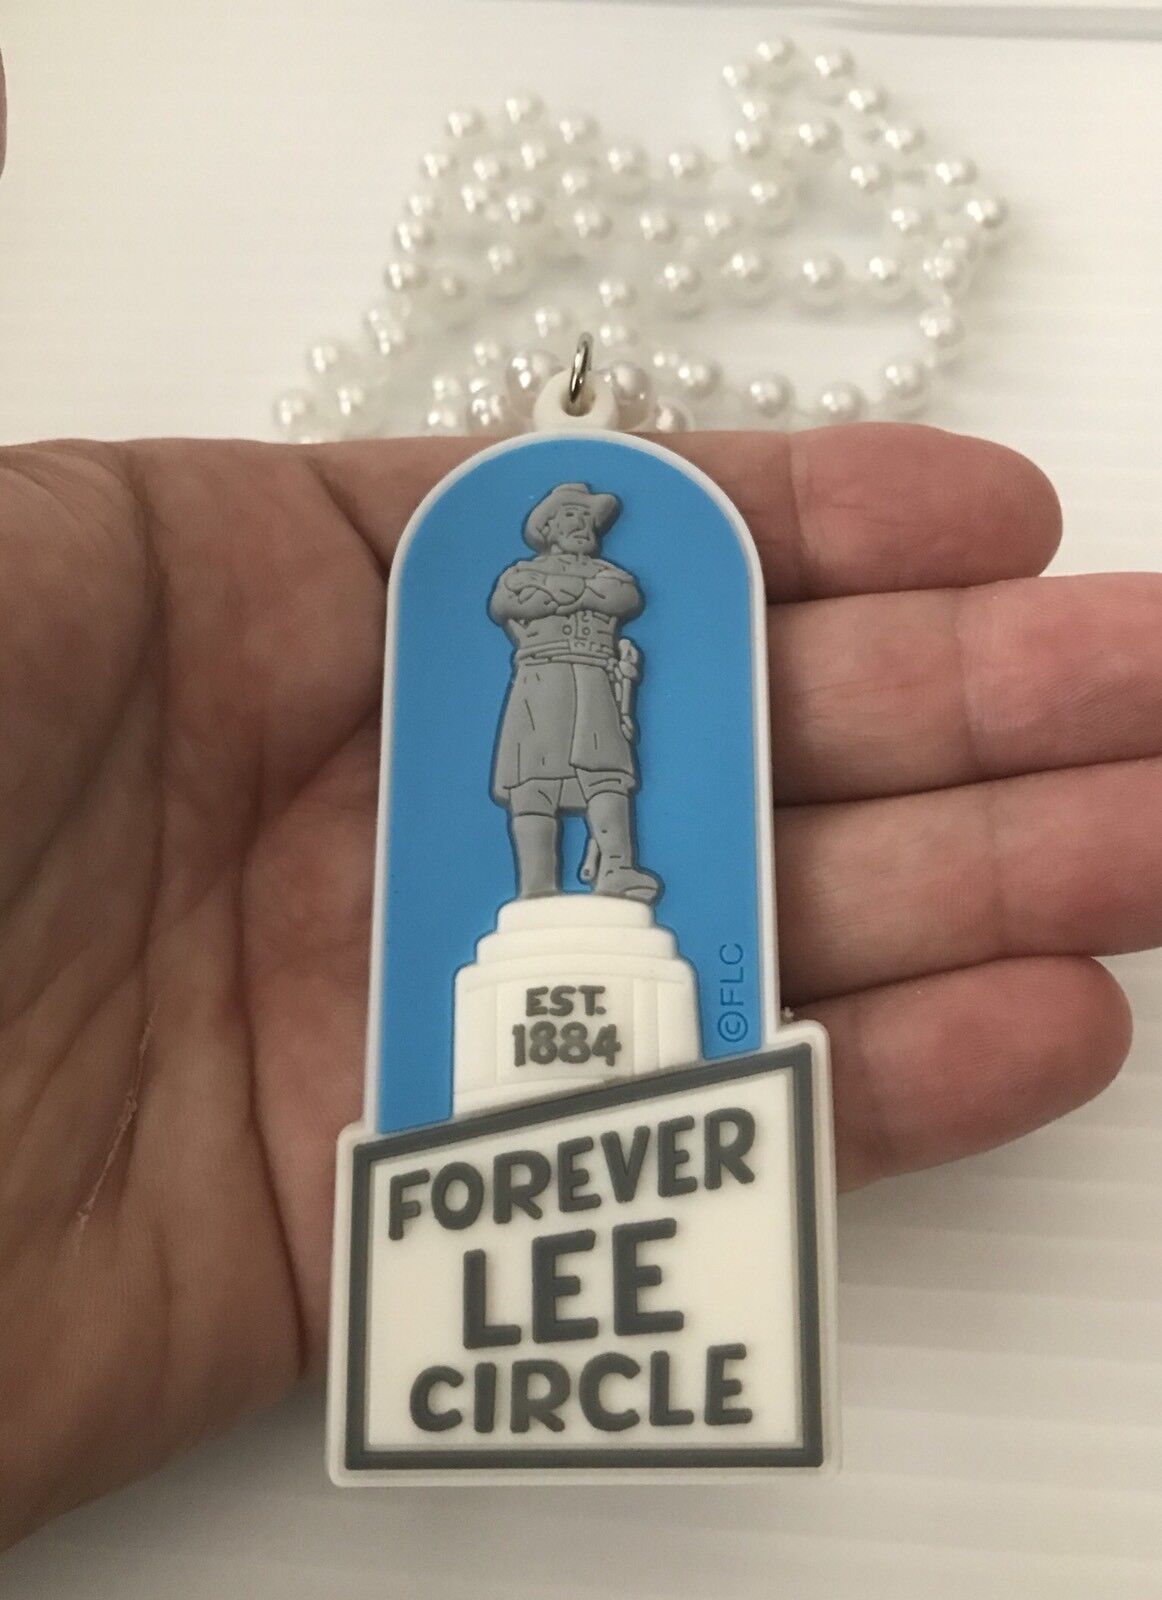 Forever Lee Circle Monument New Orleans Mardi Gras Krewe Bead Robert E. Lee Blue